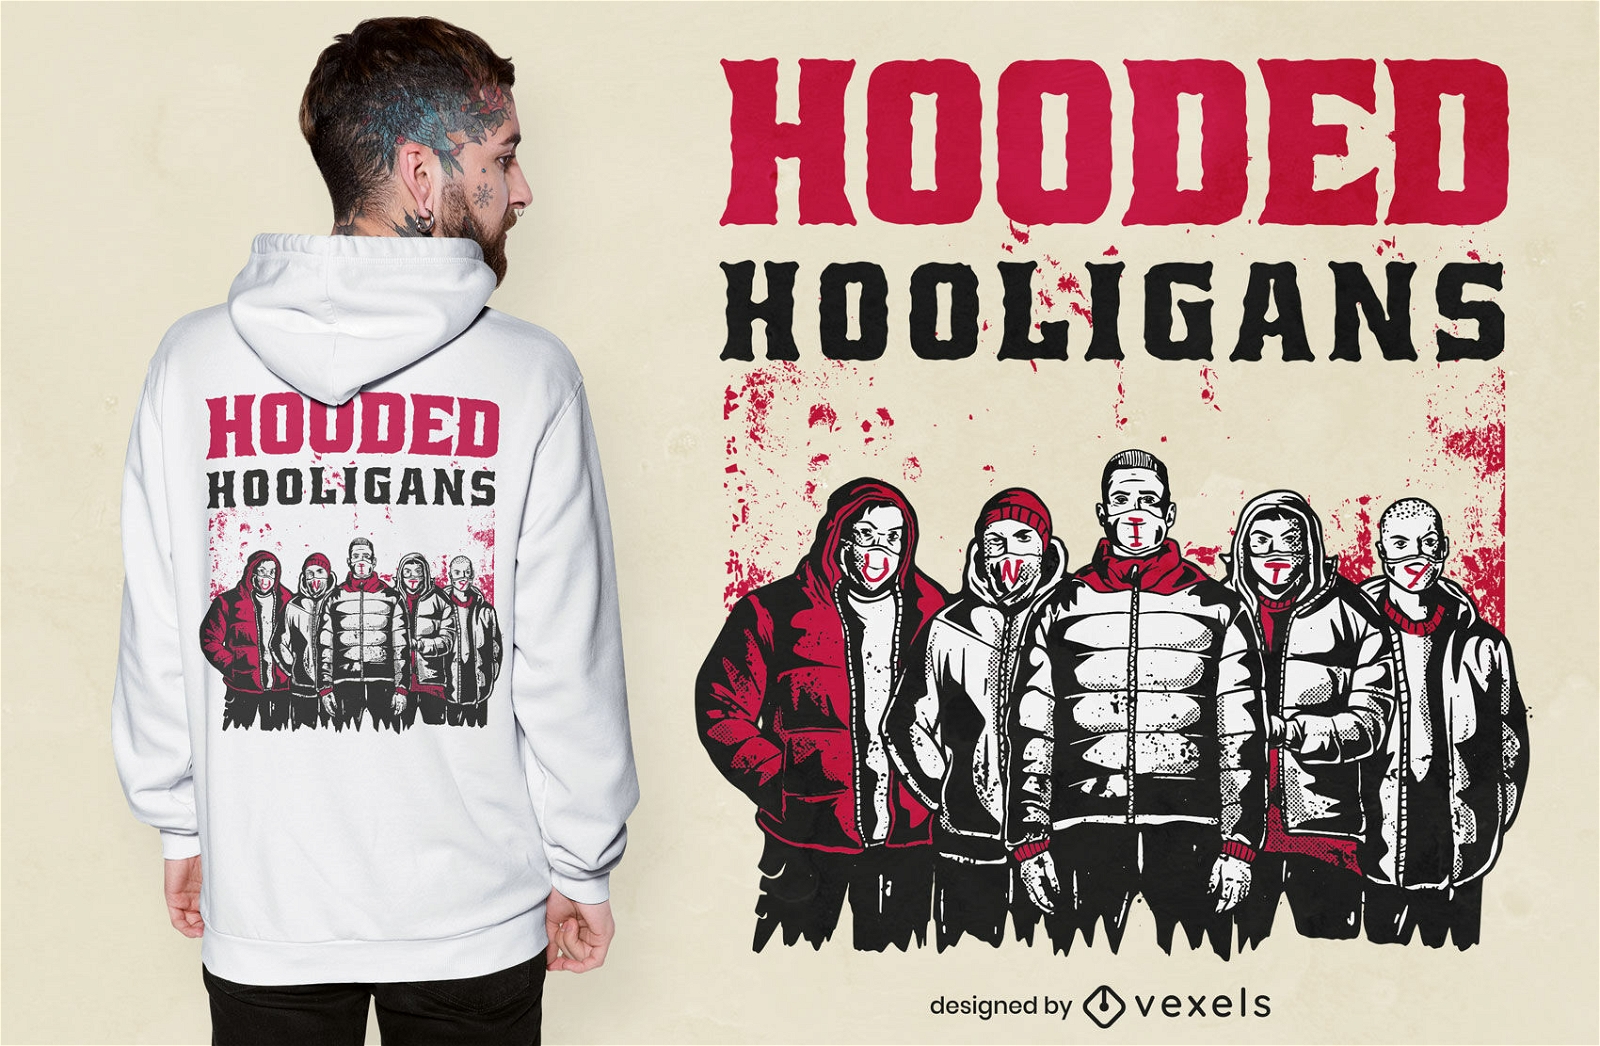 Hooded hooligans t-shirt design